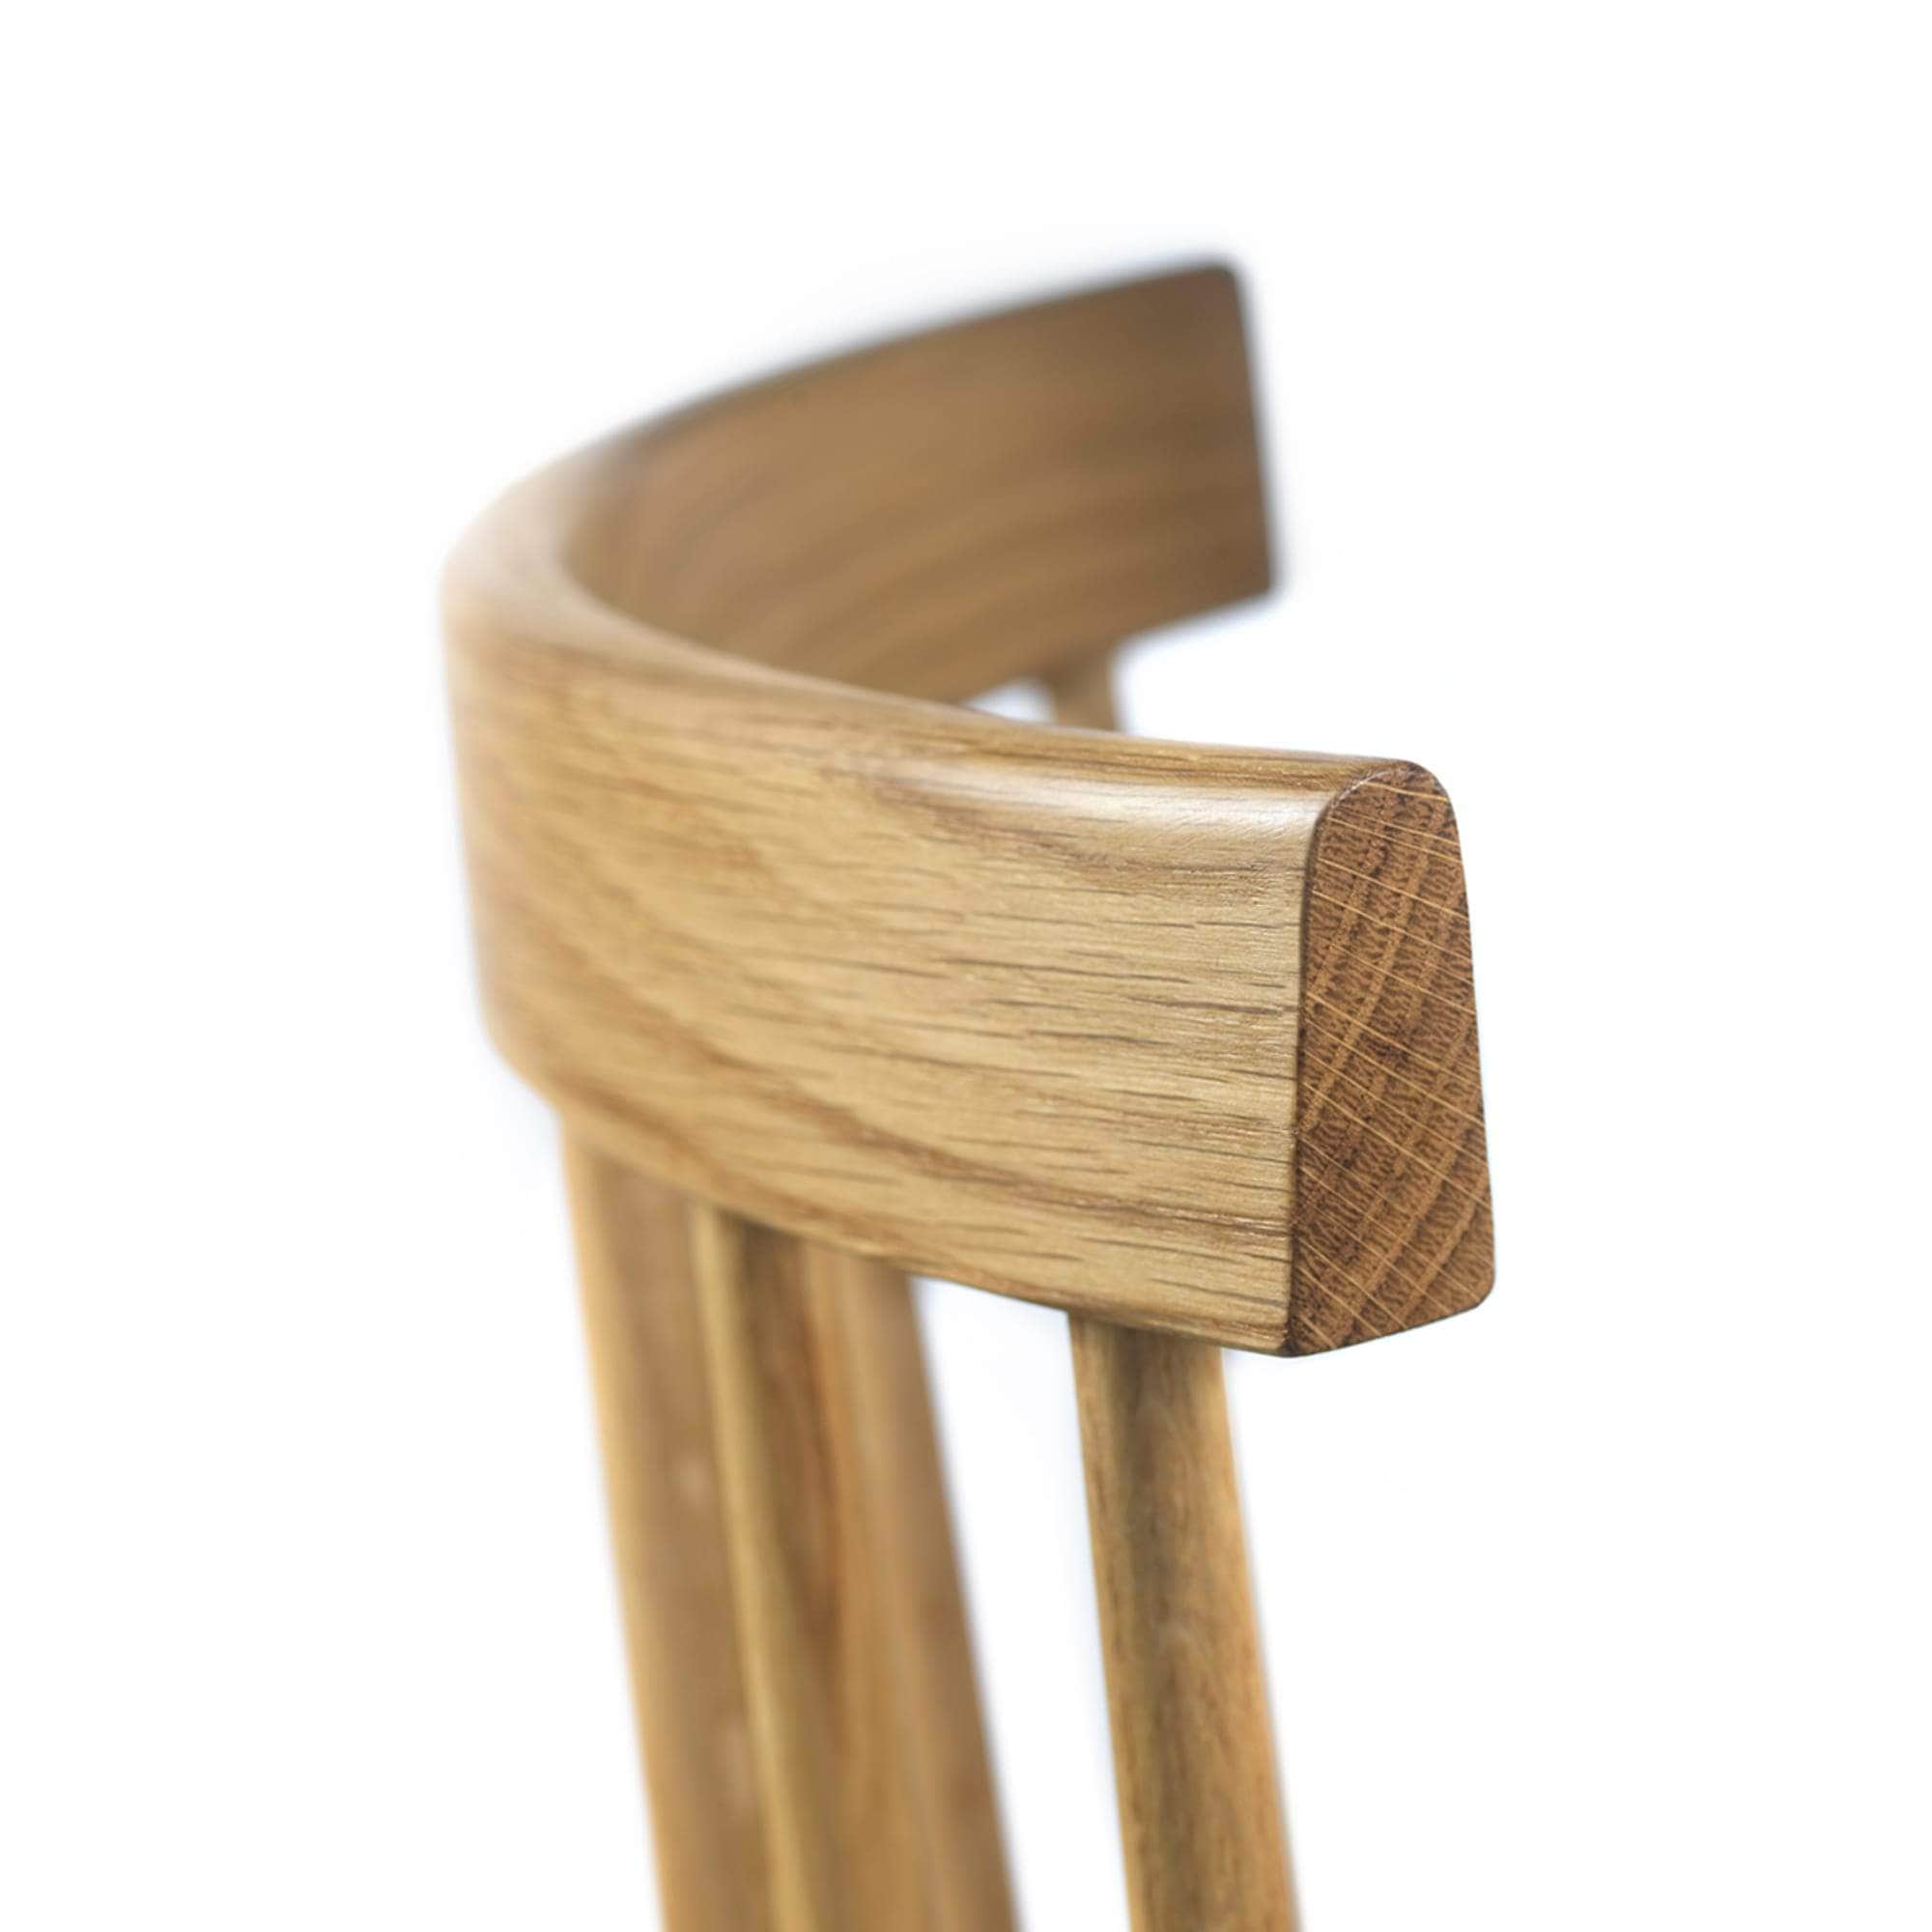 Fdb Møbler Poul Volther J46 Dining Chair Oak, Natural, H 80cm